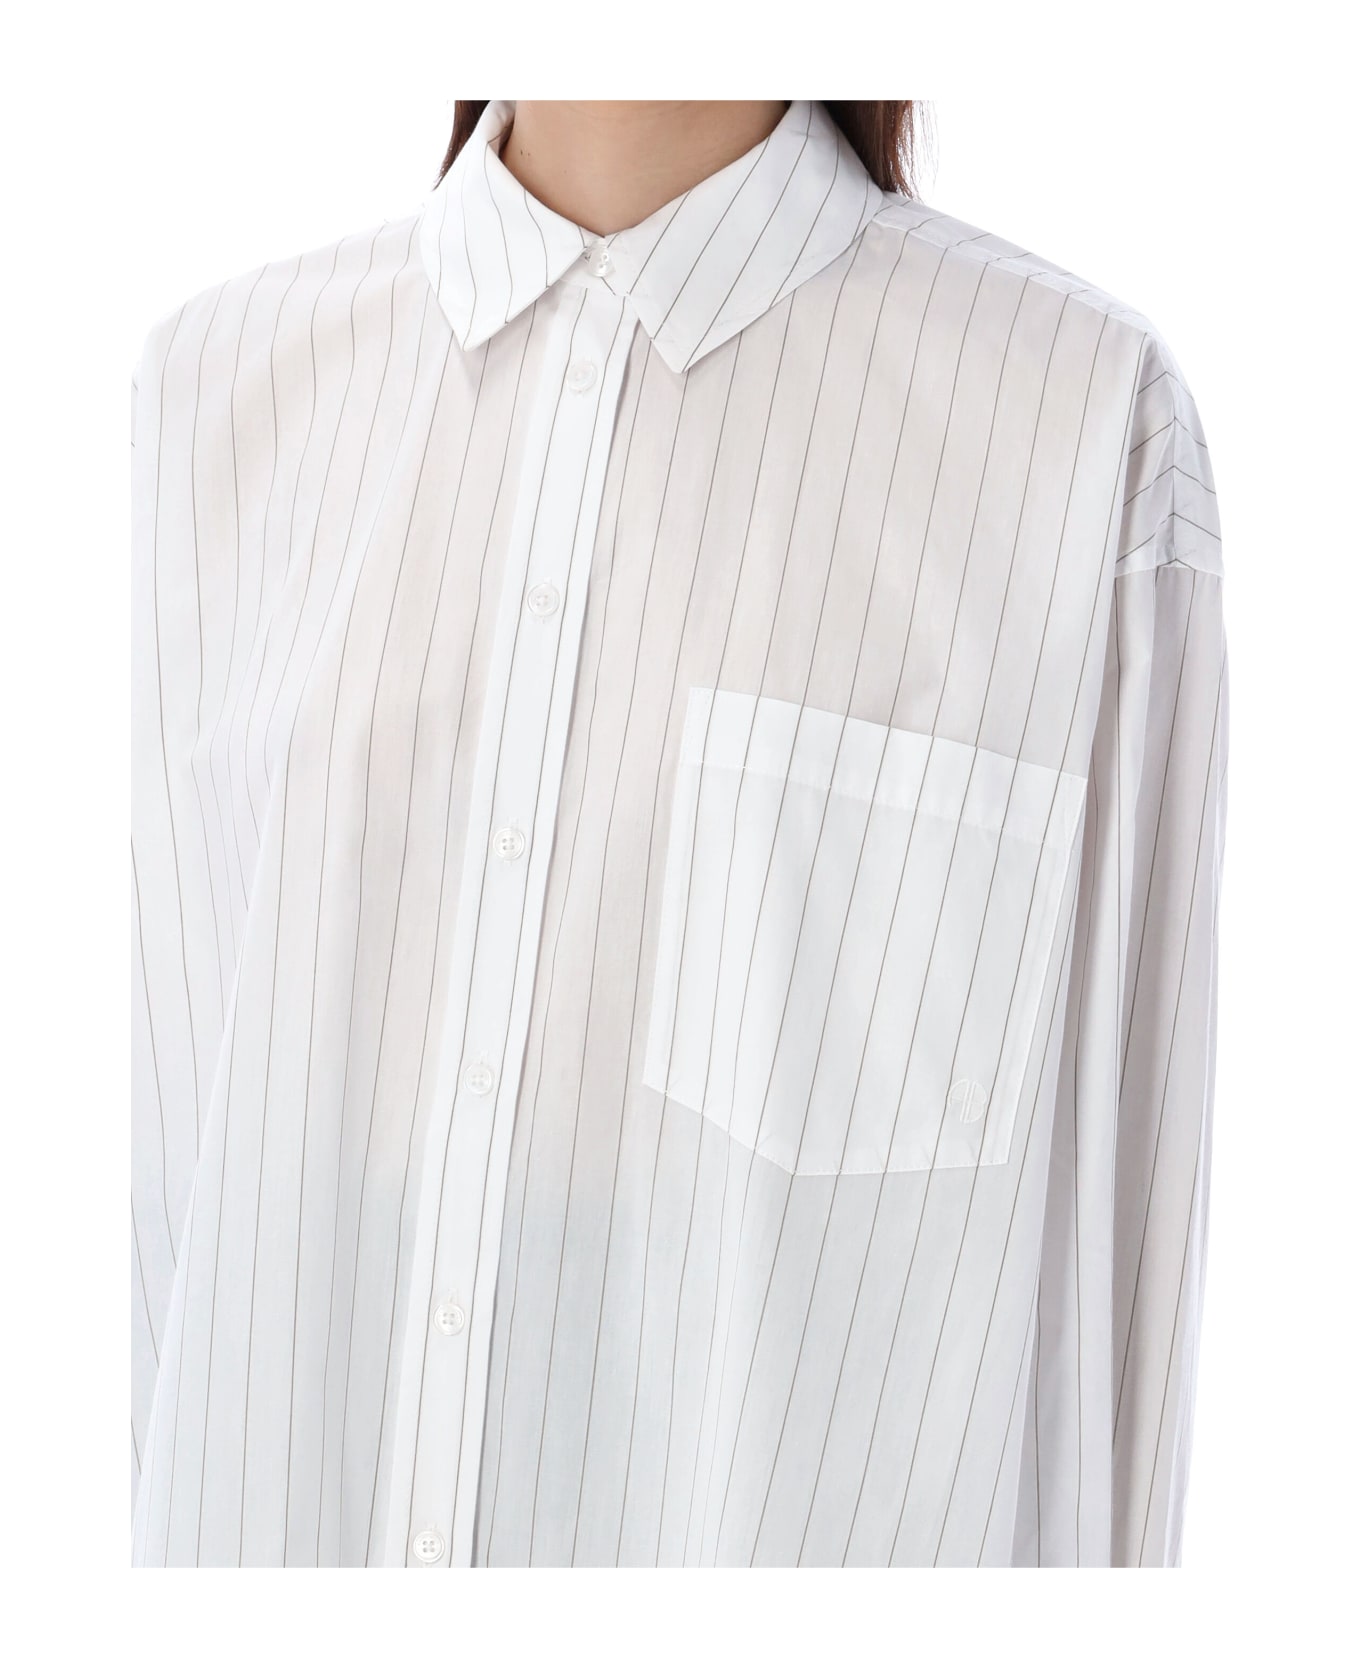 Anine Bing Chrissy Shirt - MULTI WHITE